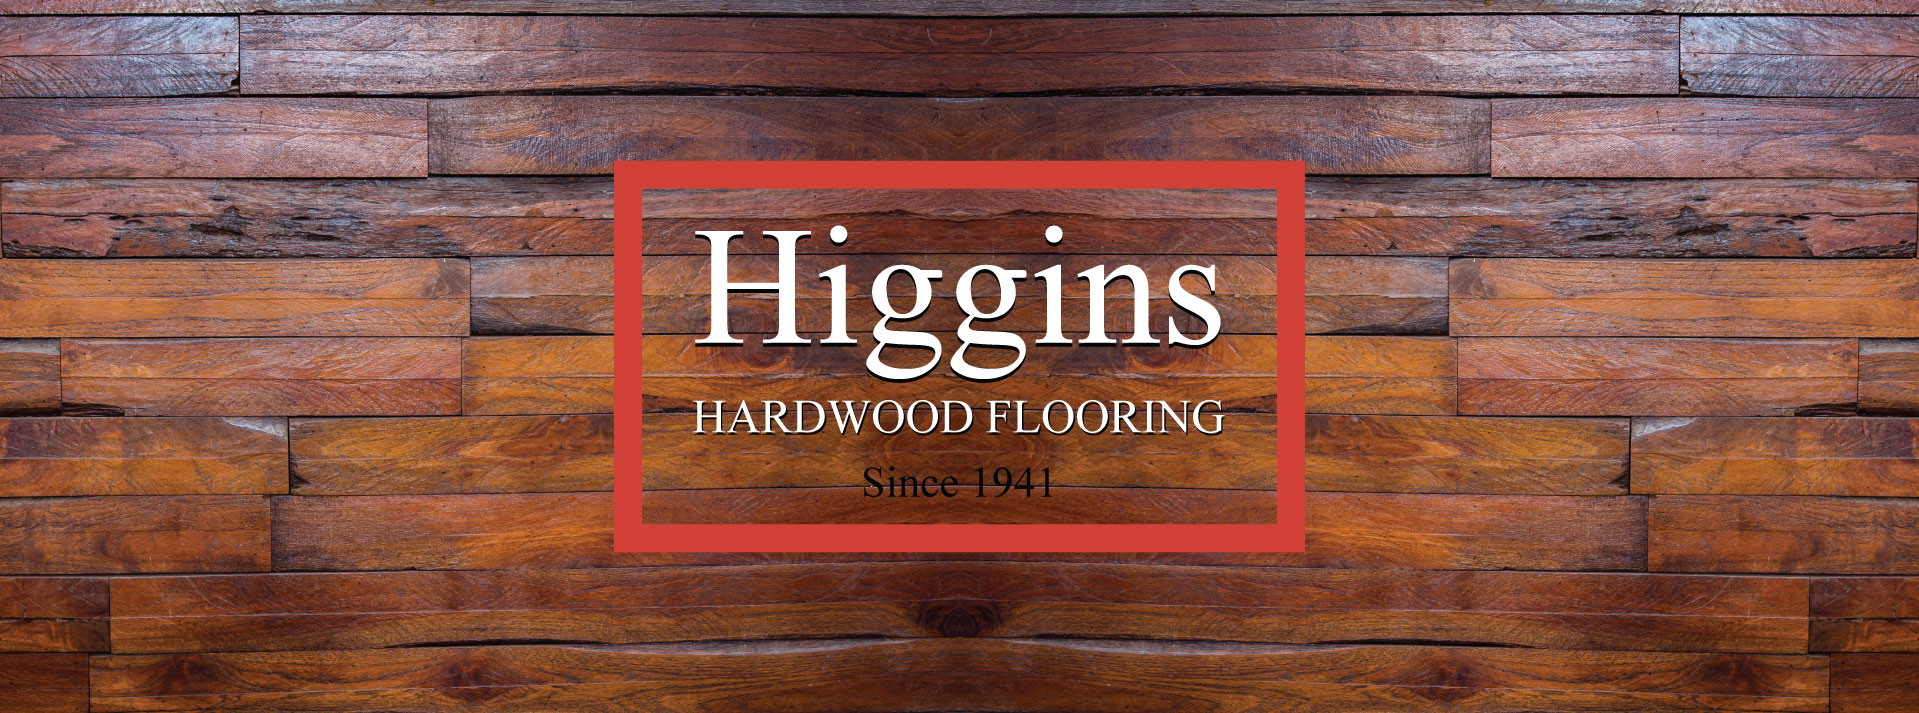 23 Famous Hardwood Floor Repair Service 2024 free download hardwood floor repair service of higgins hardwood flooring in peterborough oshawa lindsay ajax throughout office hours